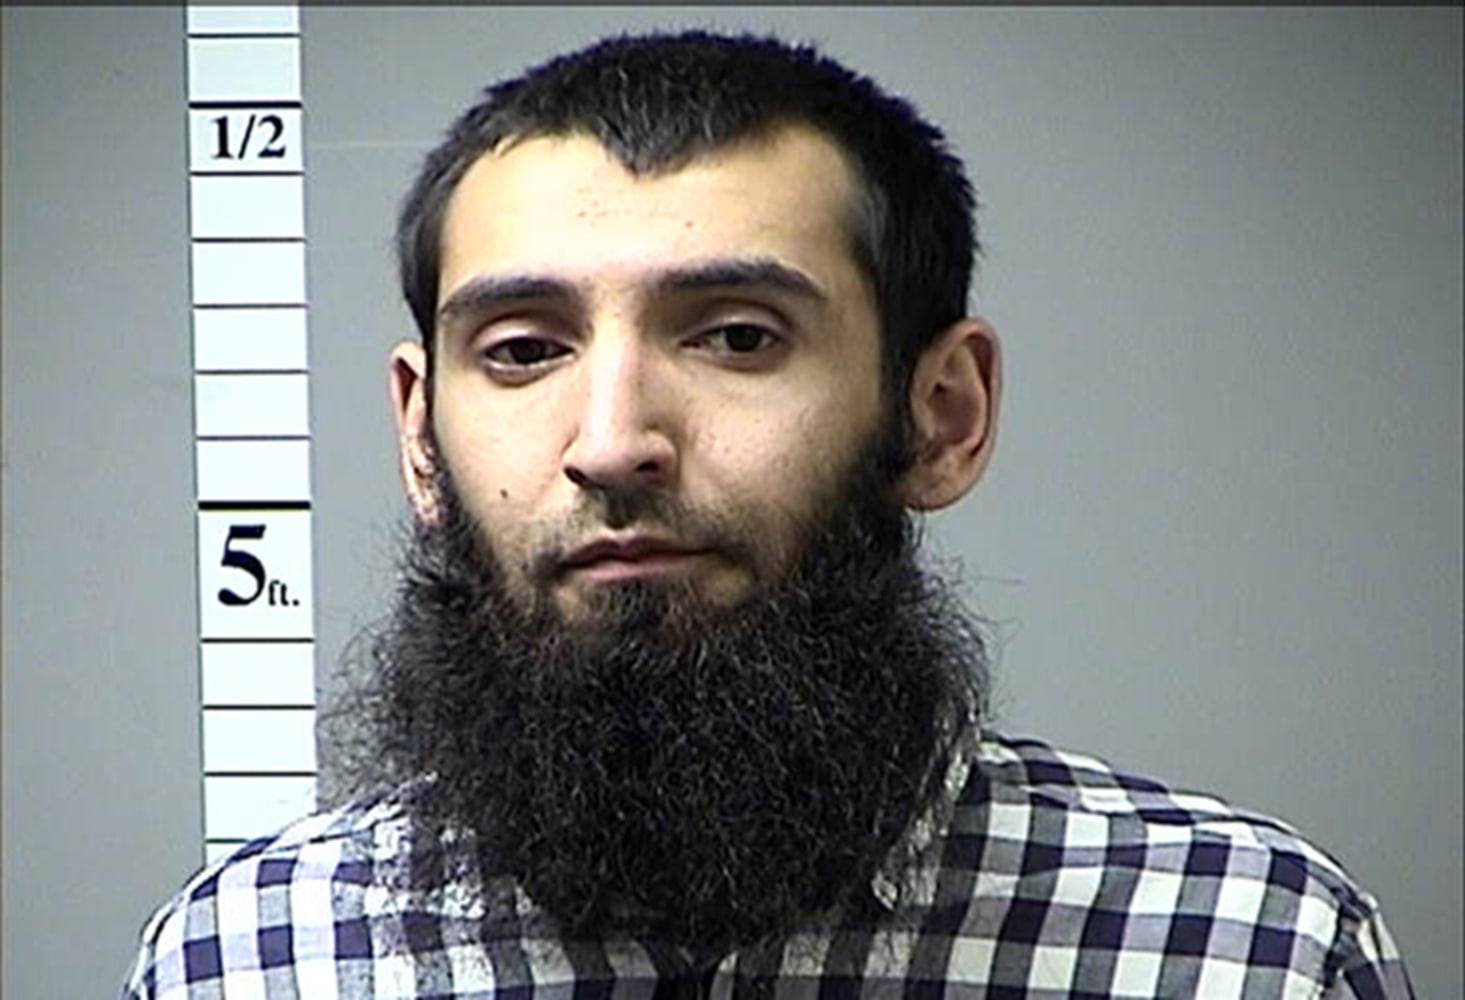 sayfullo-saipov-new-york-terror-attack-suspect-named